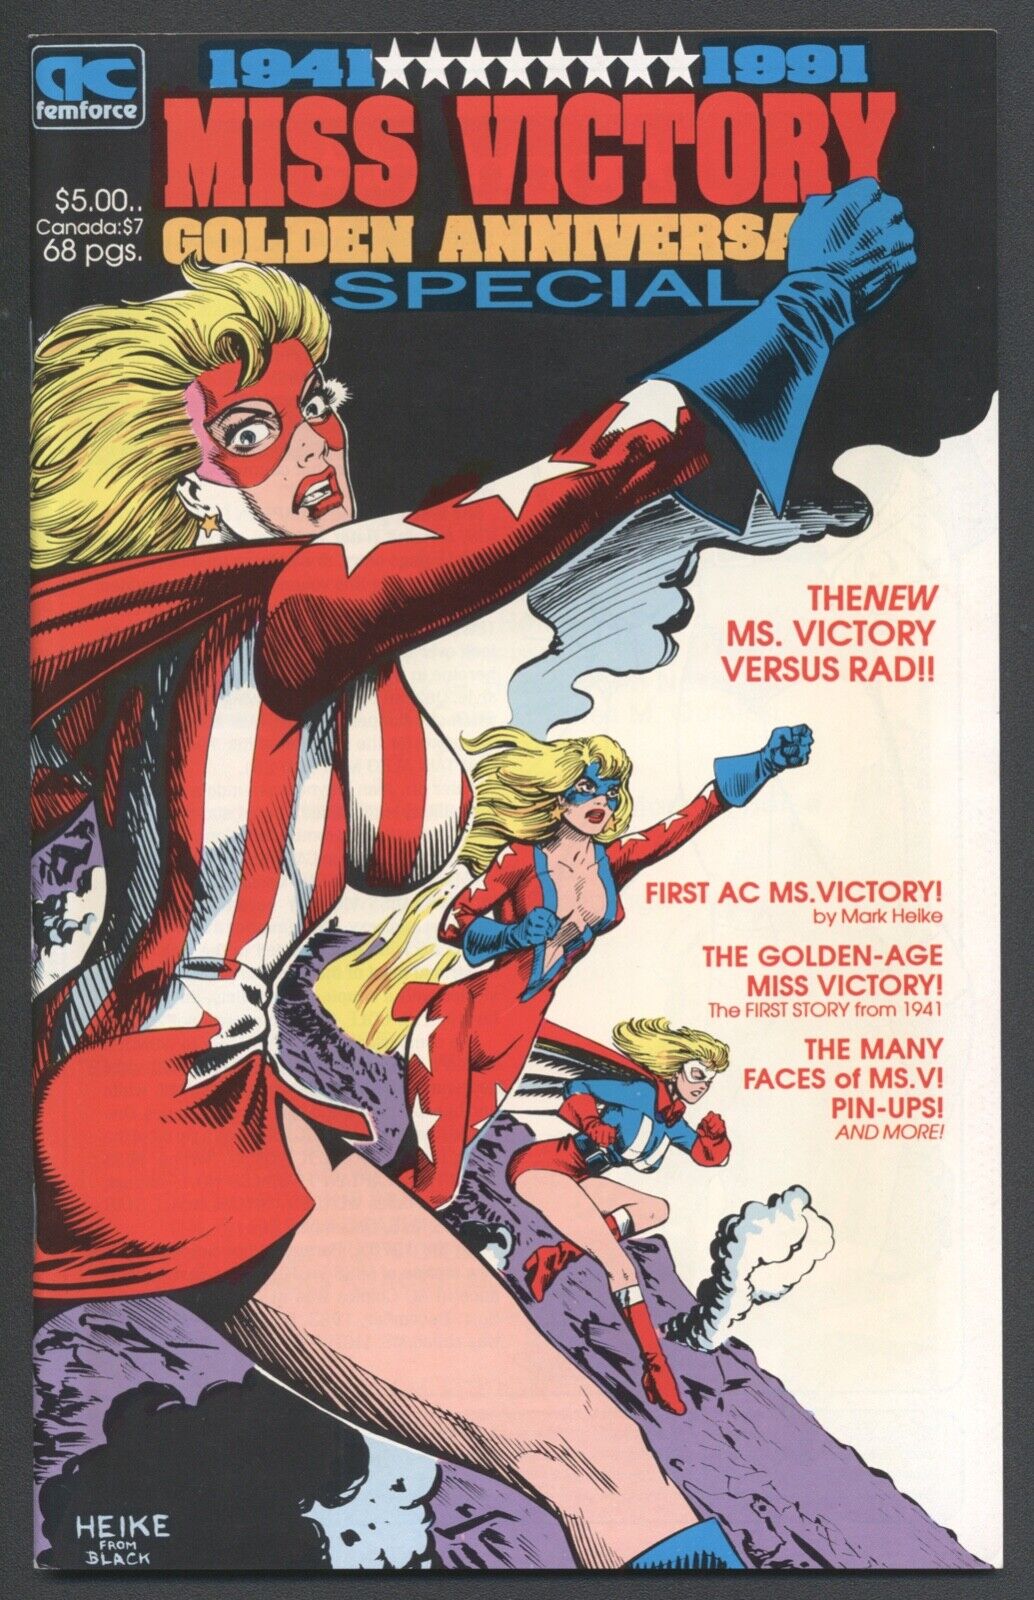 Miss Victory Golden Anniversary Special FN- AC Comics Femforce